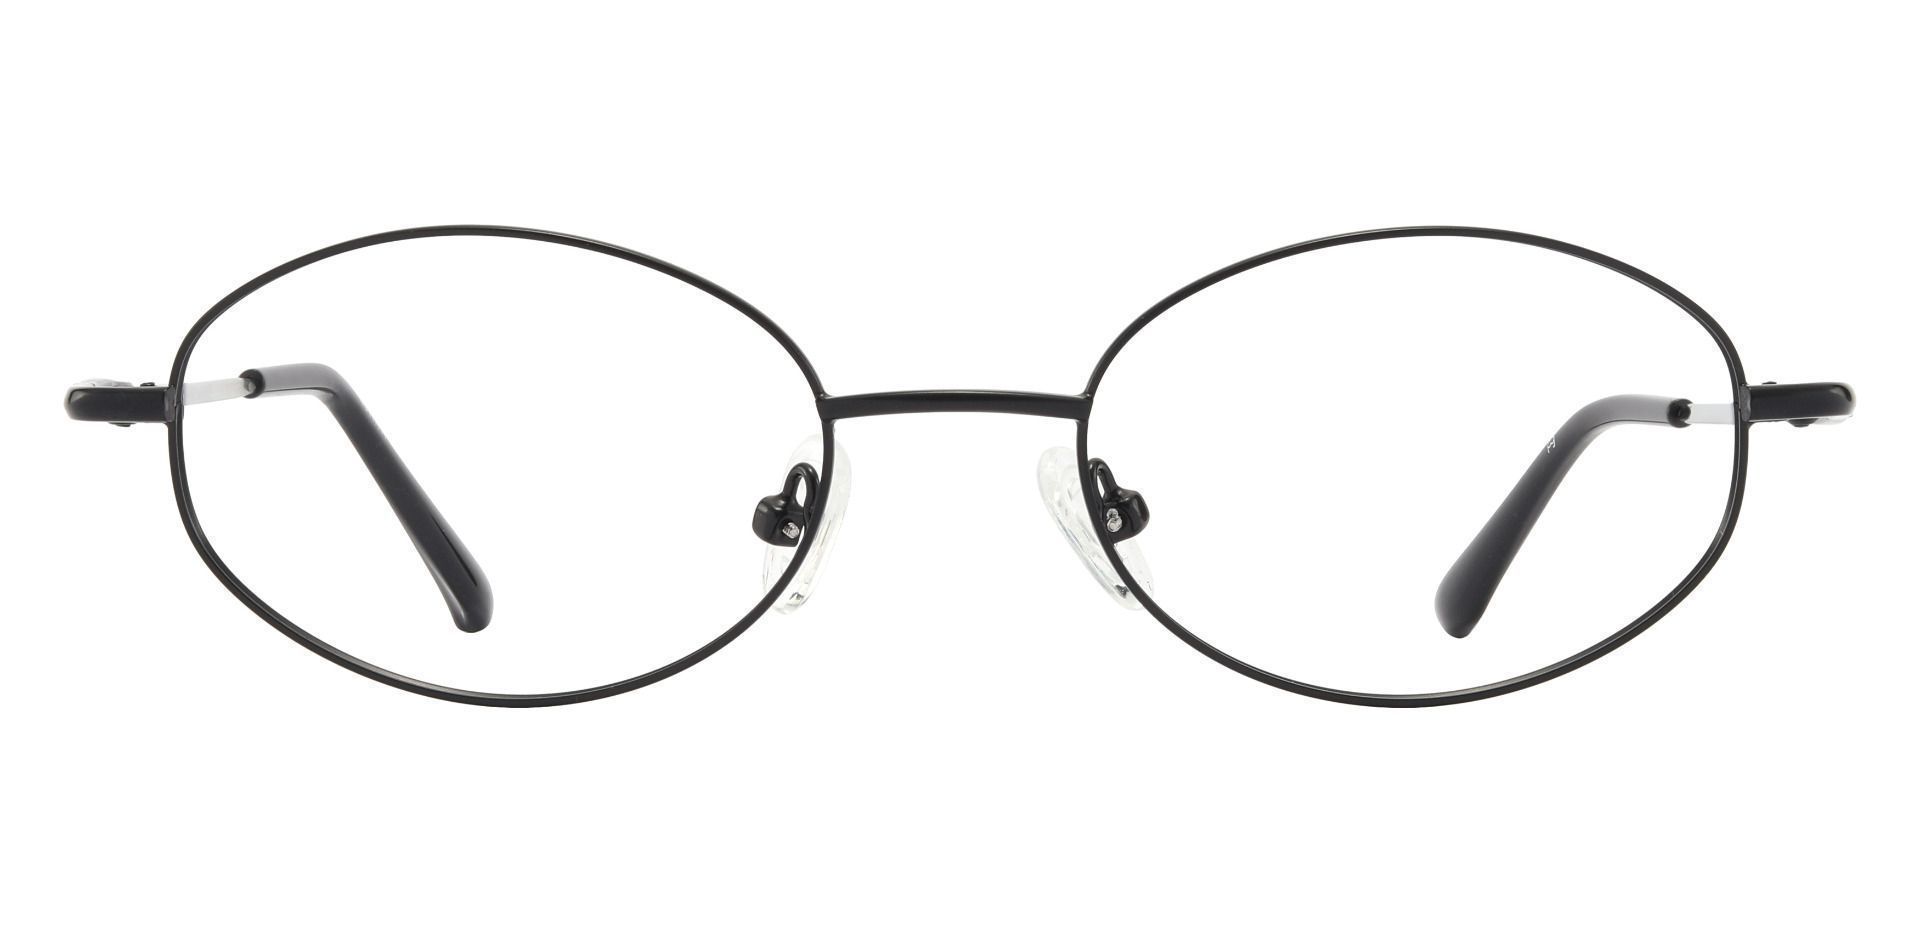 Aline Oval Eyeglasses Frame - Black